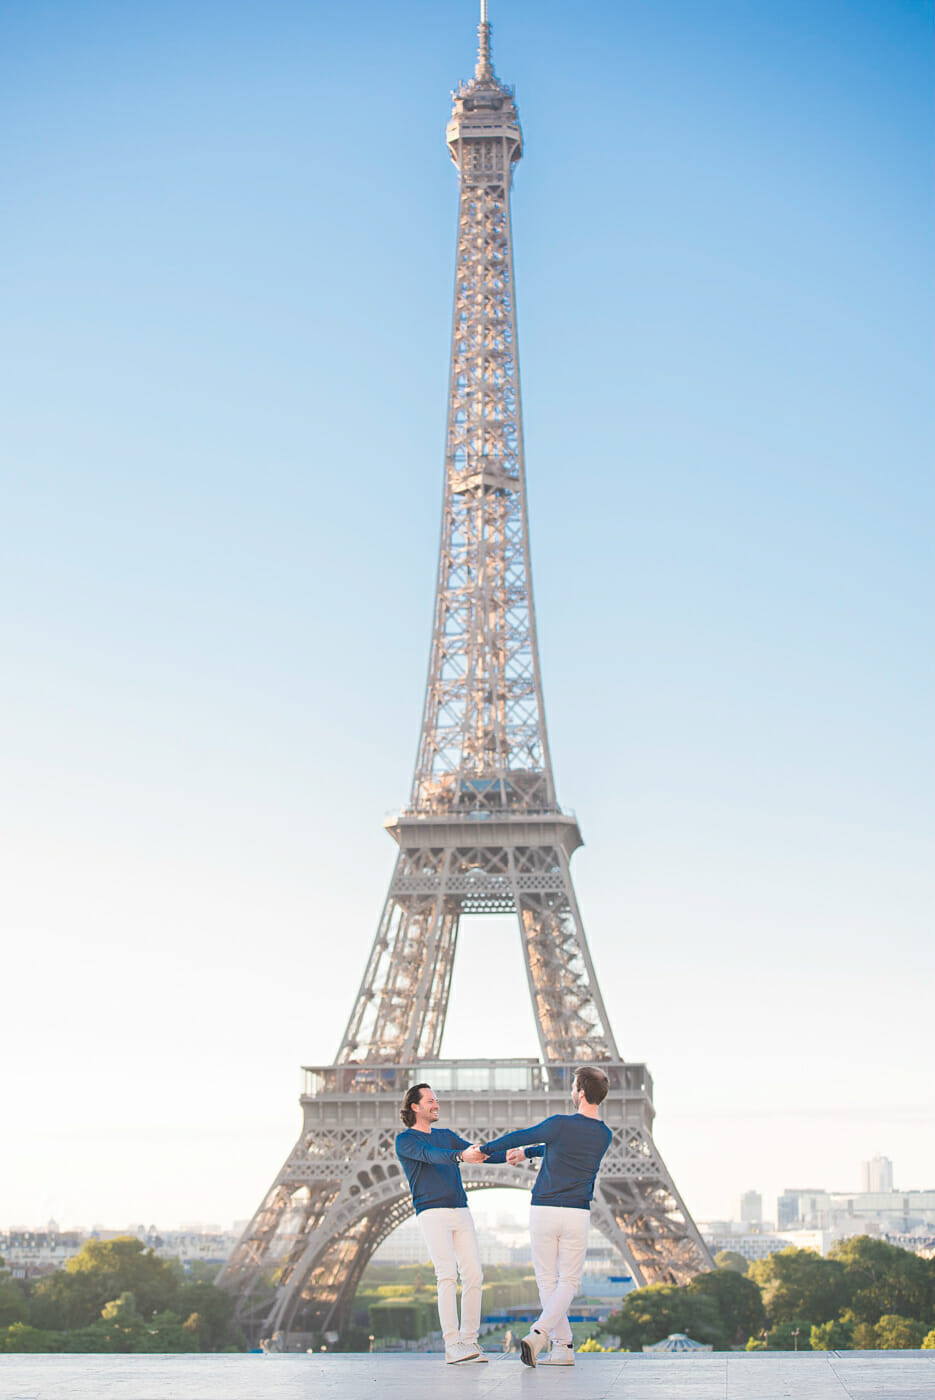 Fun Trocadero Eiffel Tower couple pictures